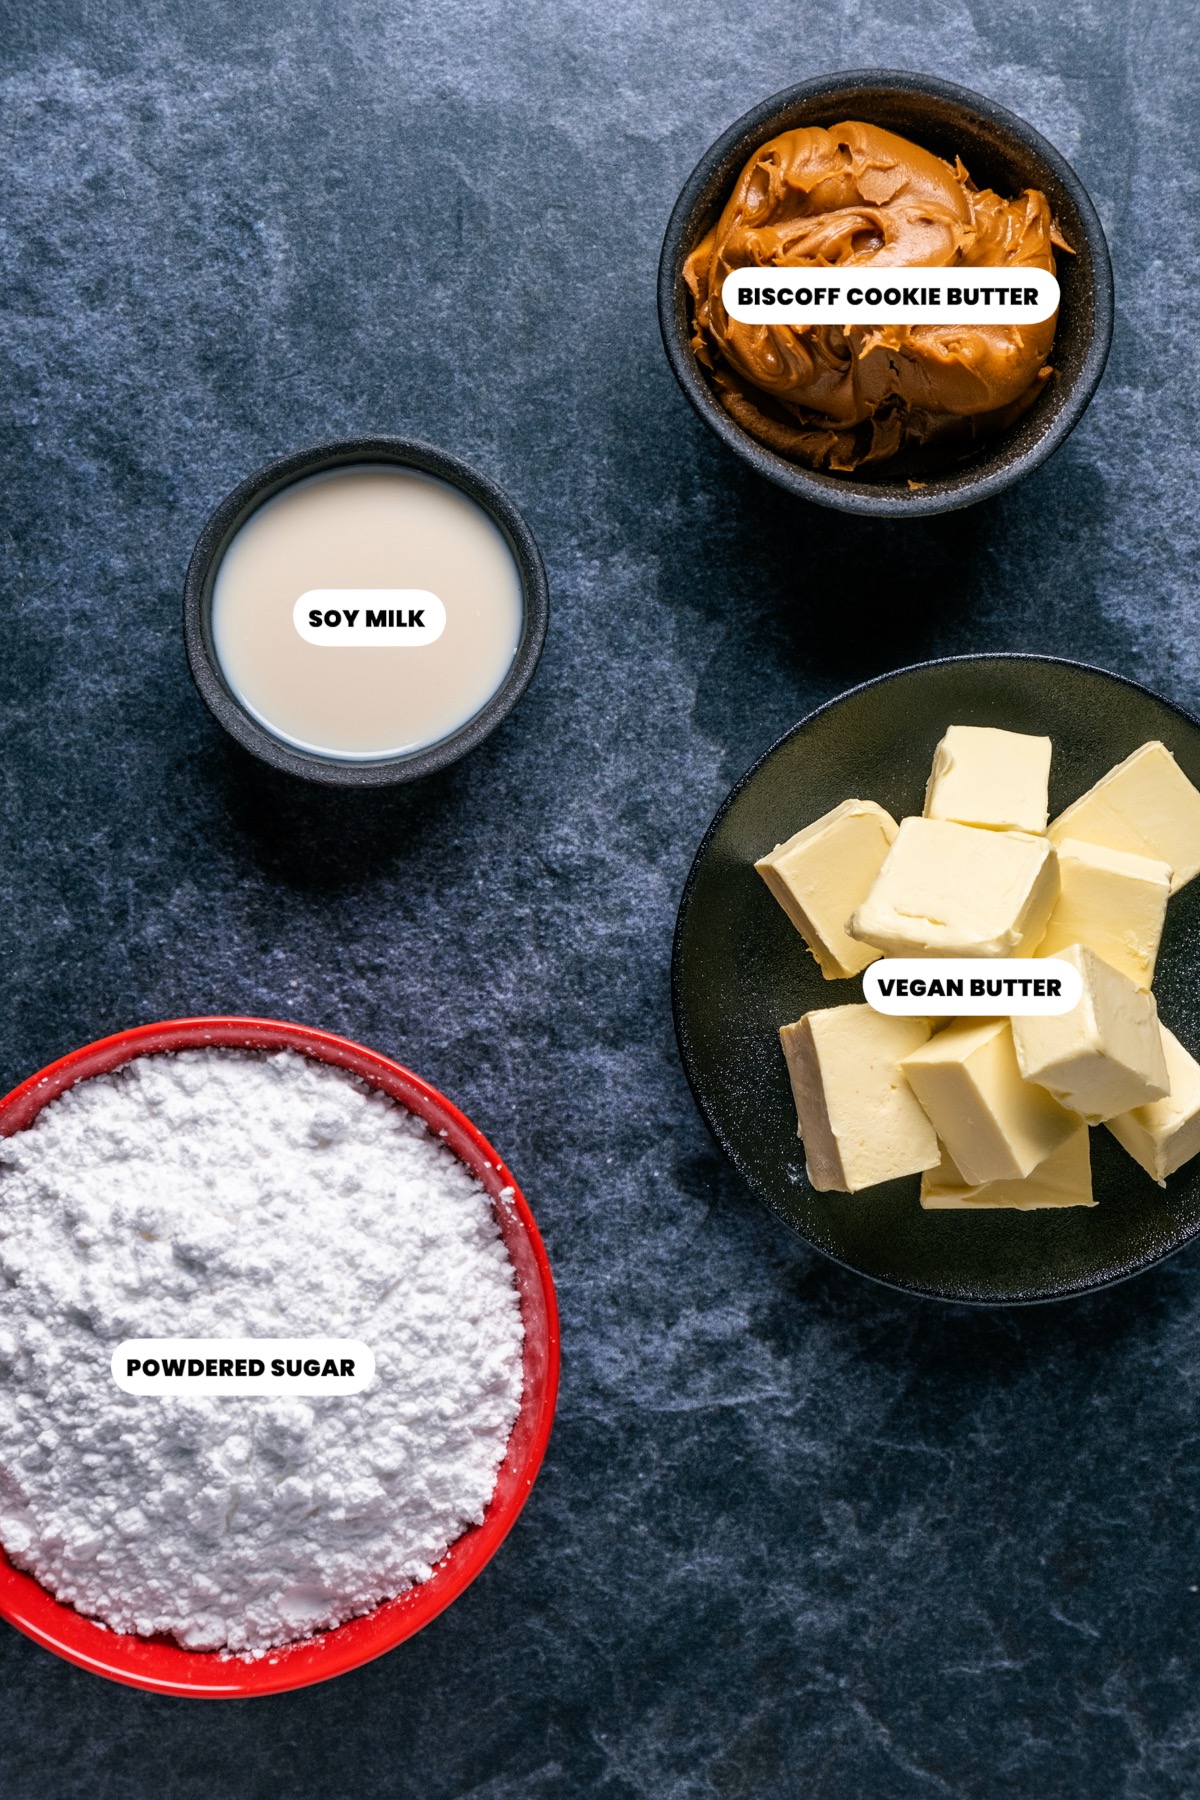 Photo of the ingredients needed to make vegan biscoff buttercream.